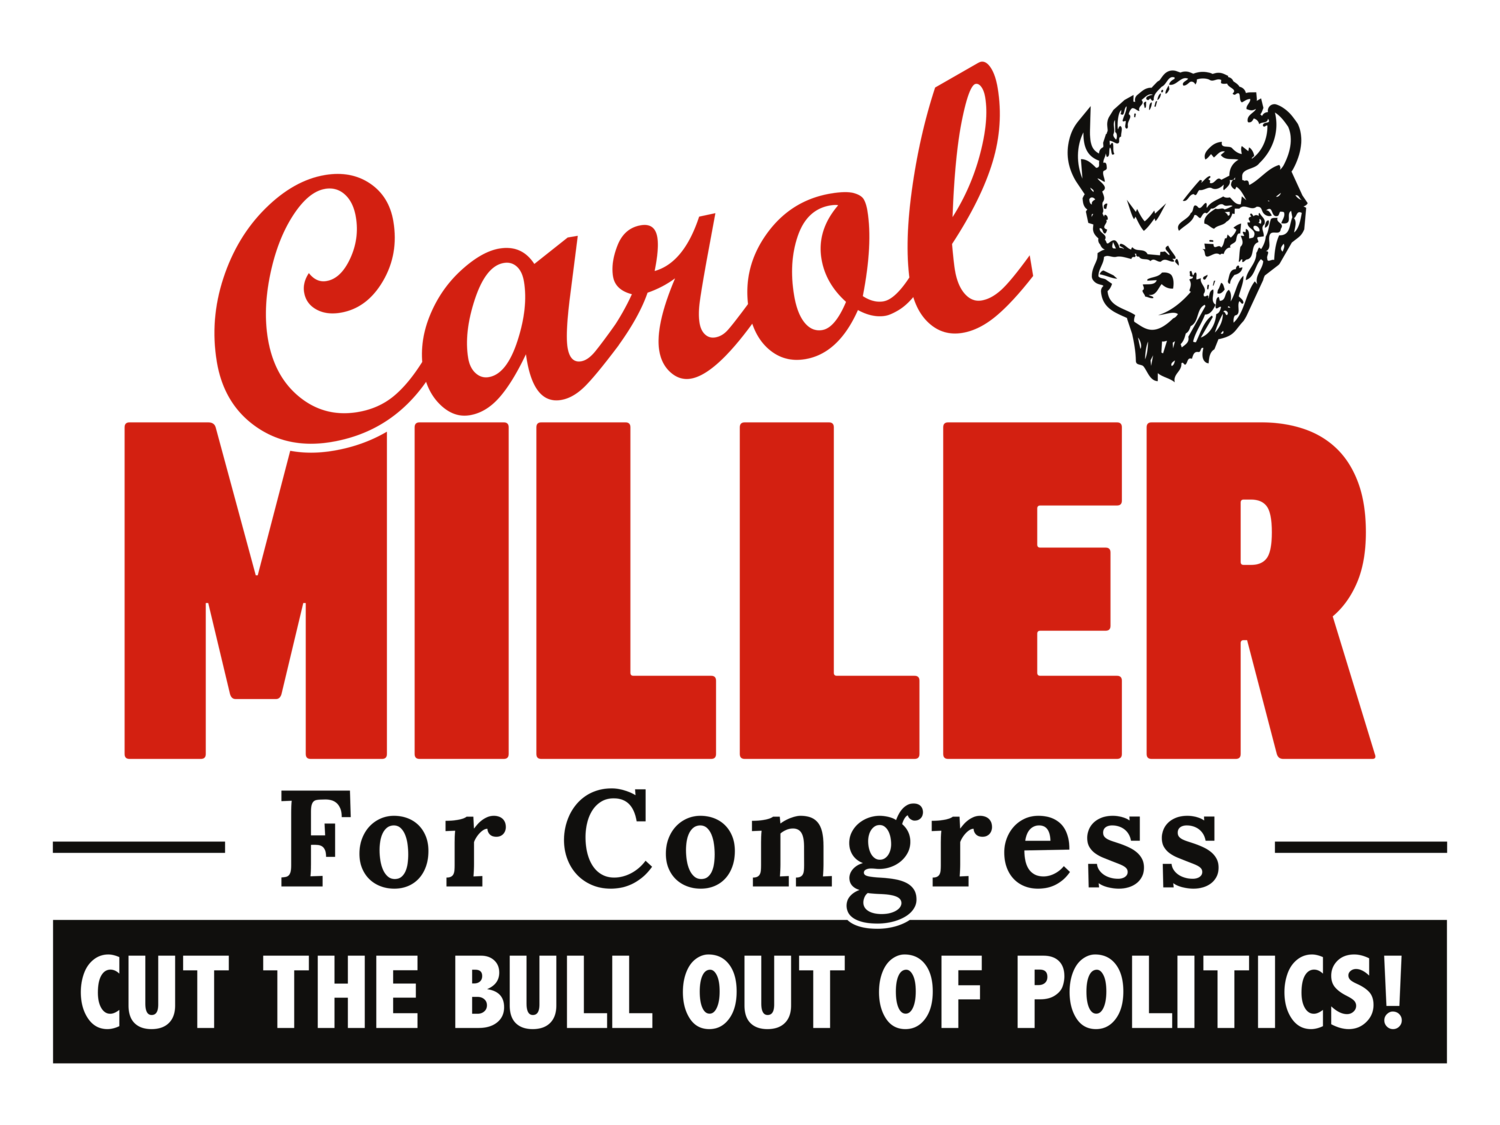 Carol Miller for Congress